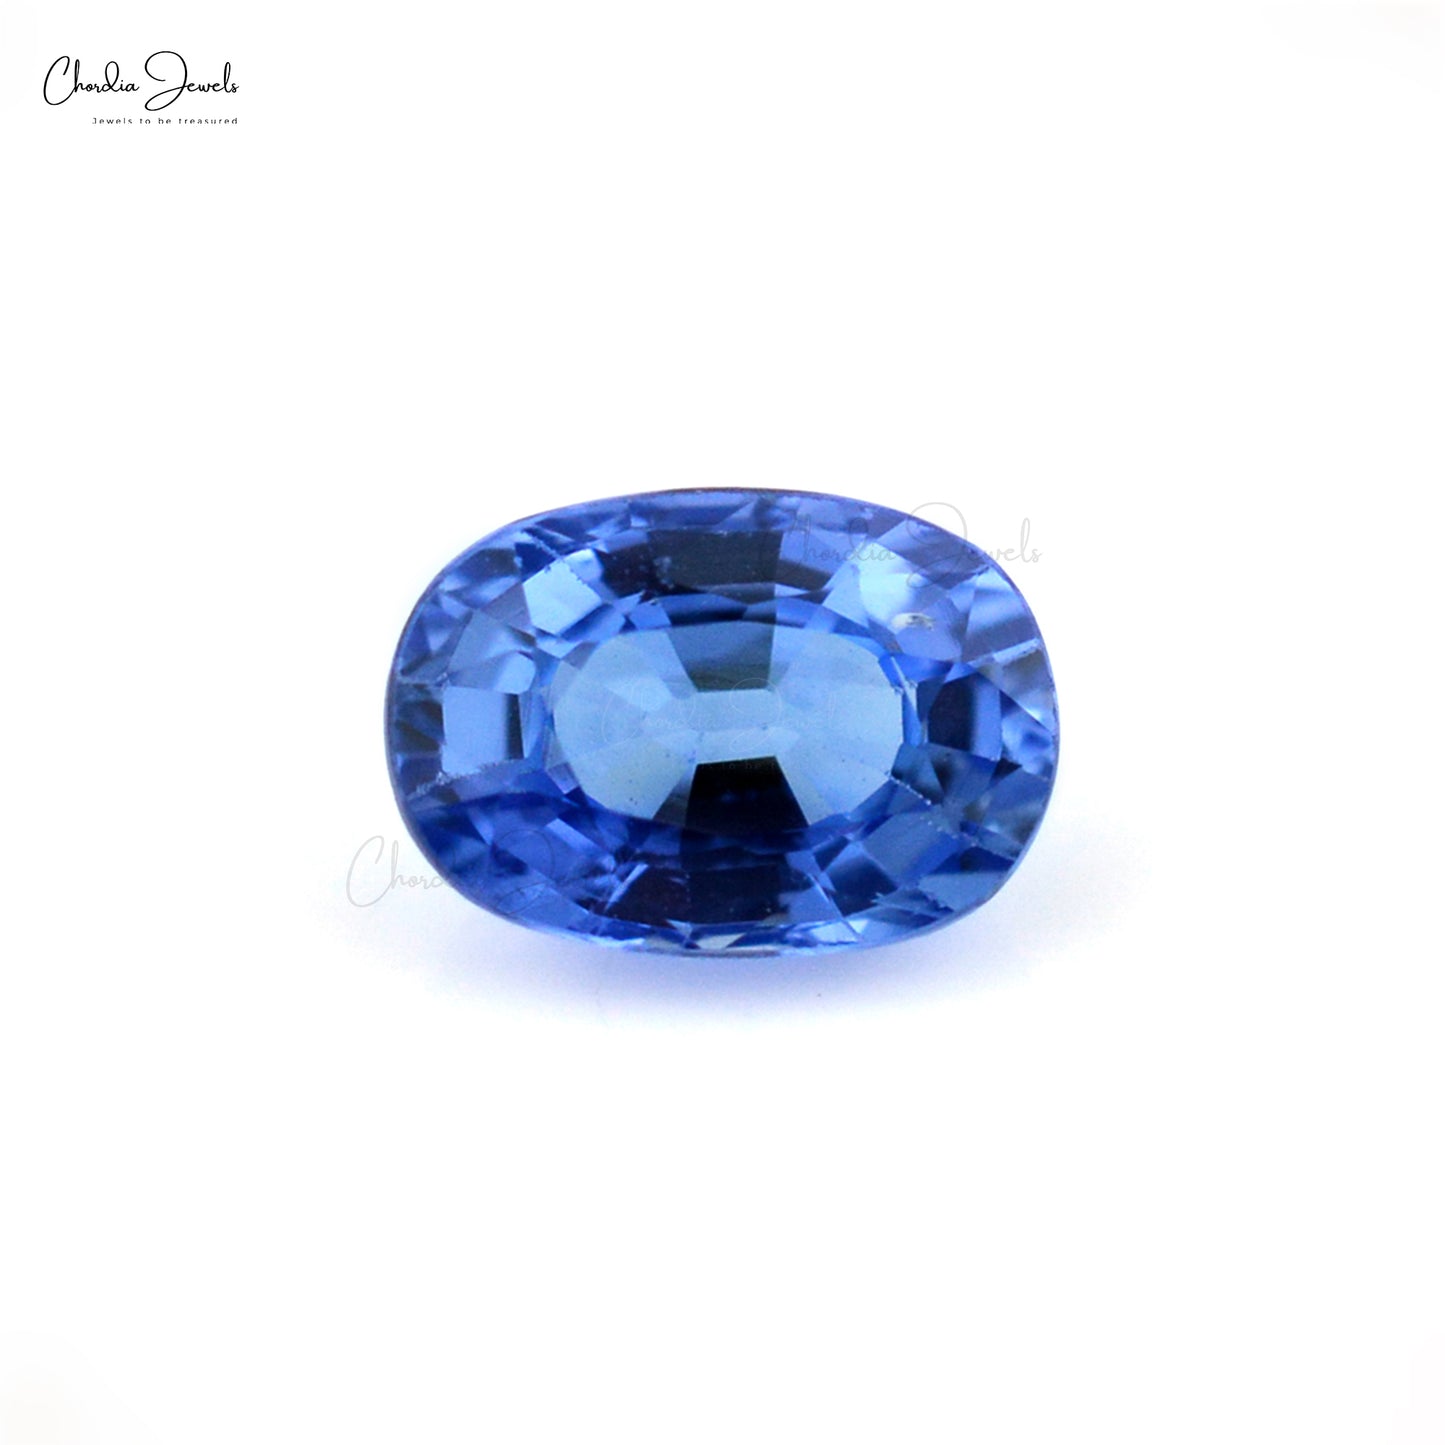 1.32 carat Super Fine Quality Blue Sapphire Oval Cut Gemstone 